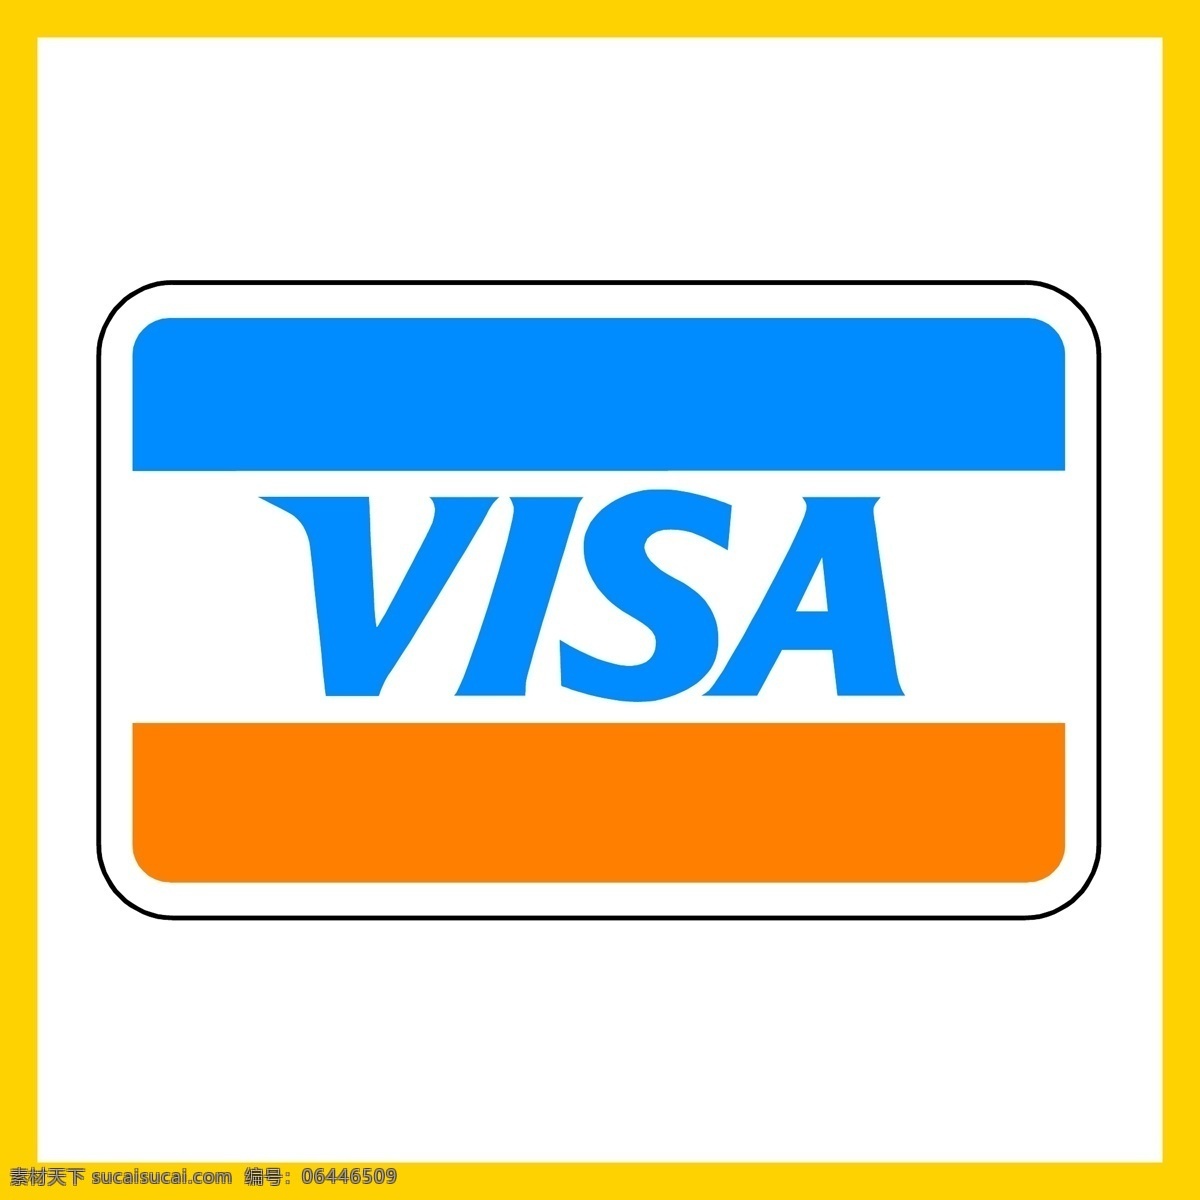 visa维萨 visa 维萨 中国银联 银行 信用卡 金融 投资理财 理财产品 贷款 国企 事业单位 logo 标志 矢量 vi logo设计